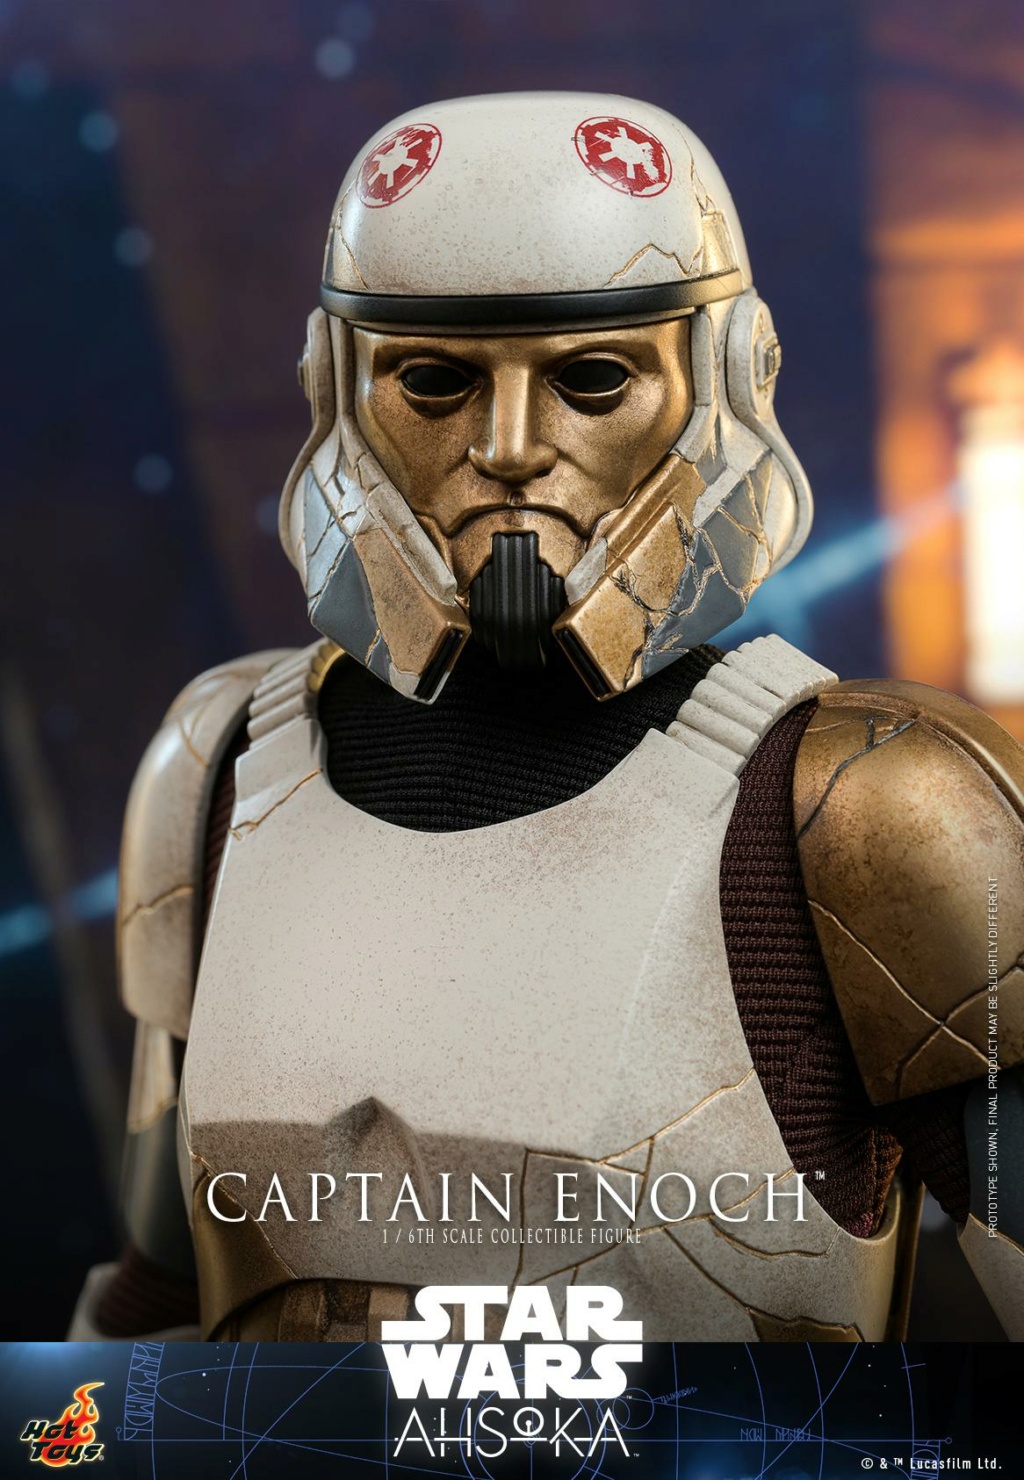 Star Wars: Ahsoka - 1/6th scale Captain Enoch Collectible Figure - Hot Toys Capta102